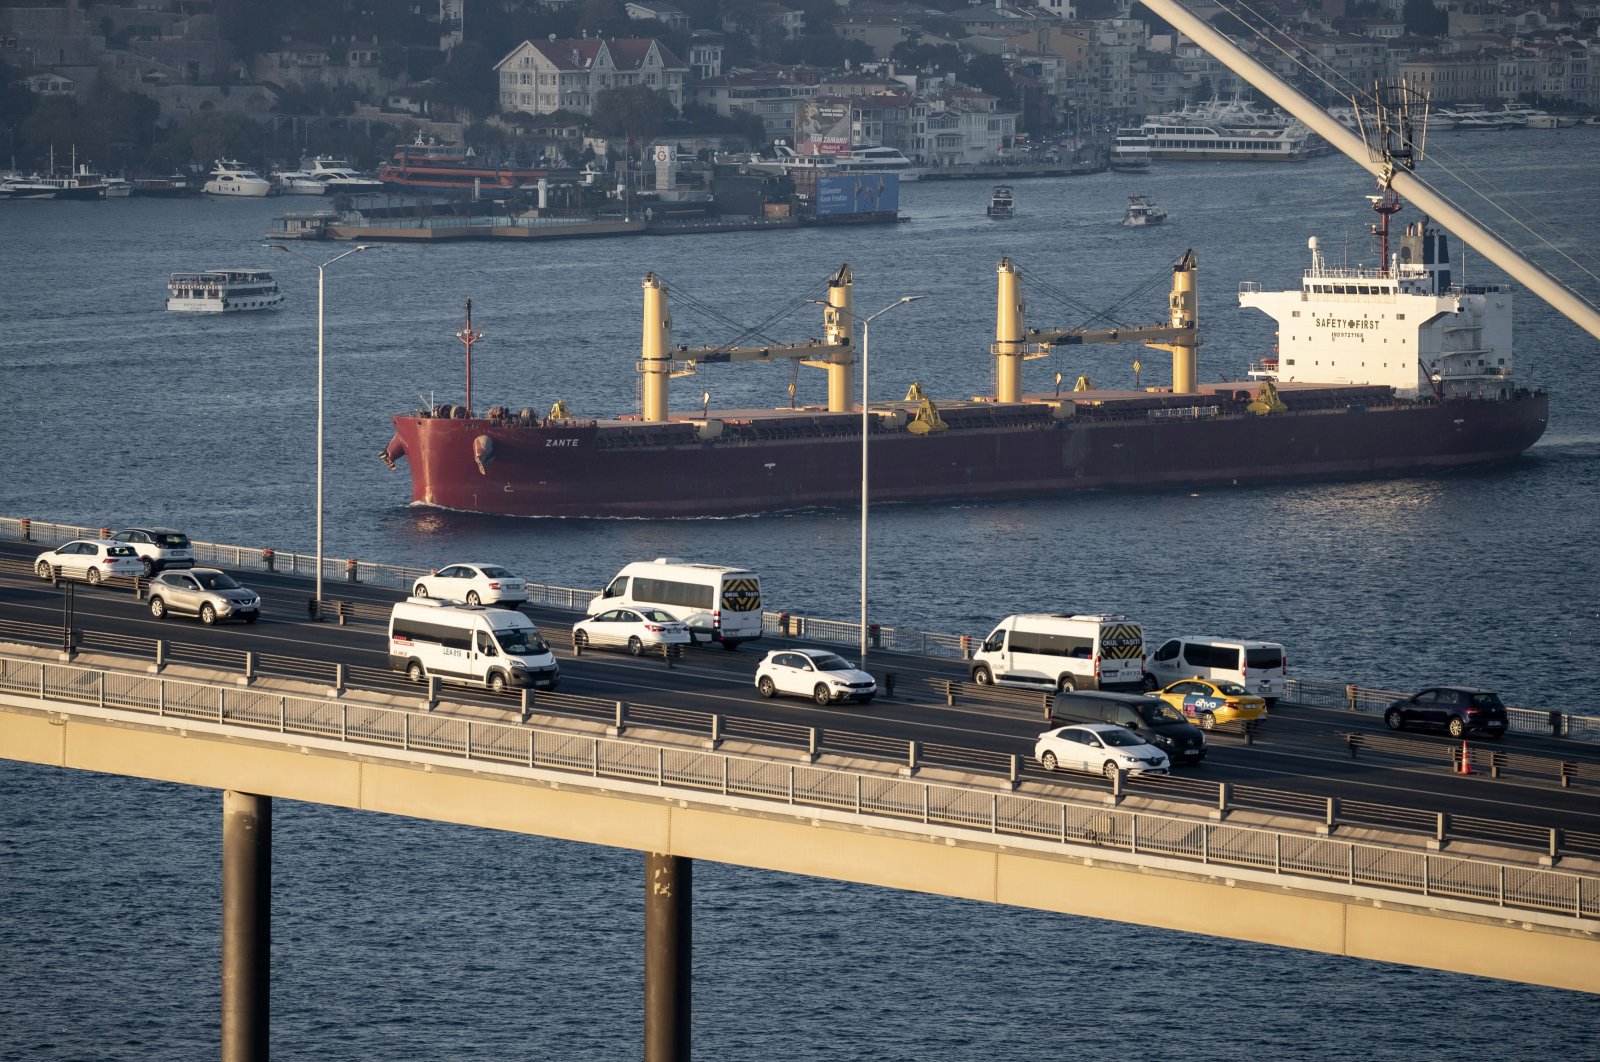 The cargo ship Zante, carrying Ukrainian grain,sails through the Bosporus behind the Martyrs Bridge, in Istanbul, Türkiye, Nov. 2, 2022. (EPA Photo)